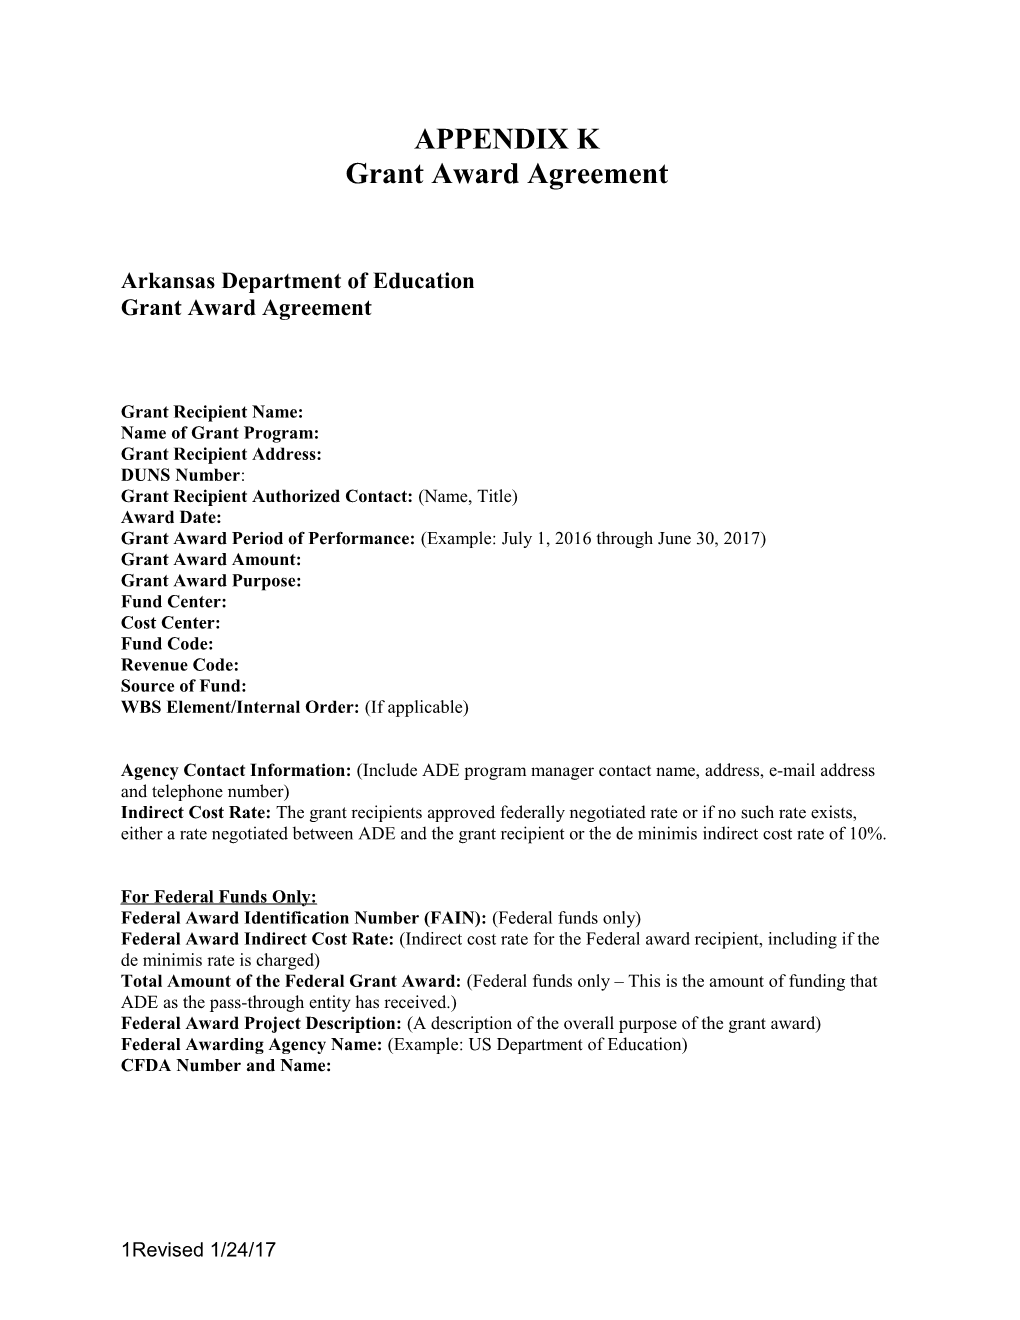 Grant Award Agreement